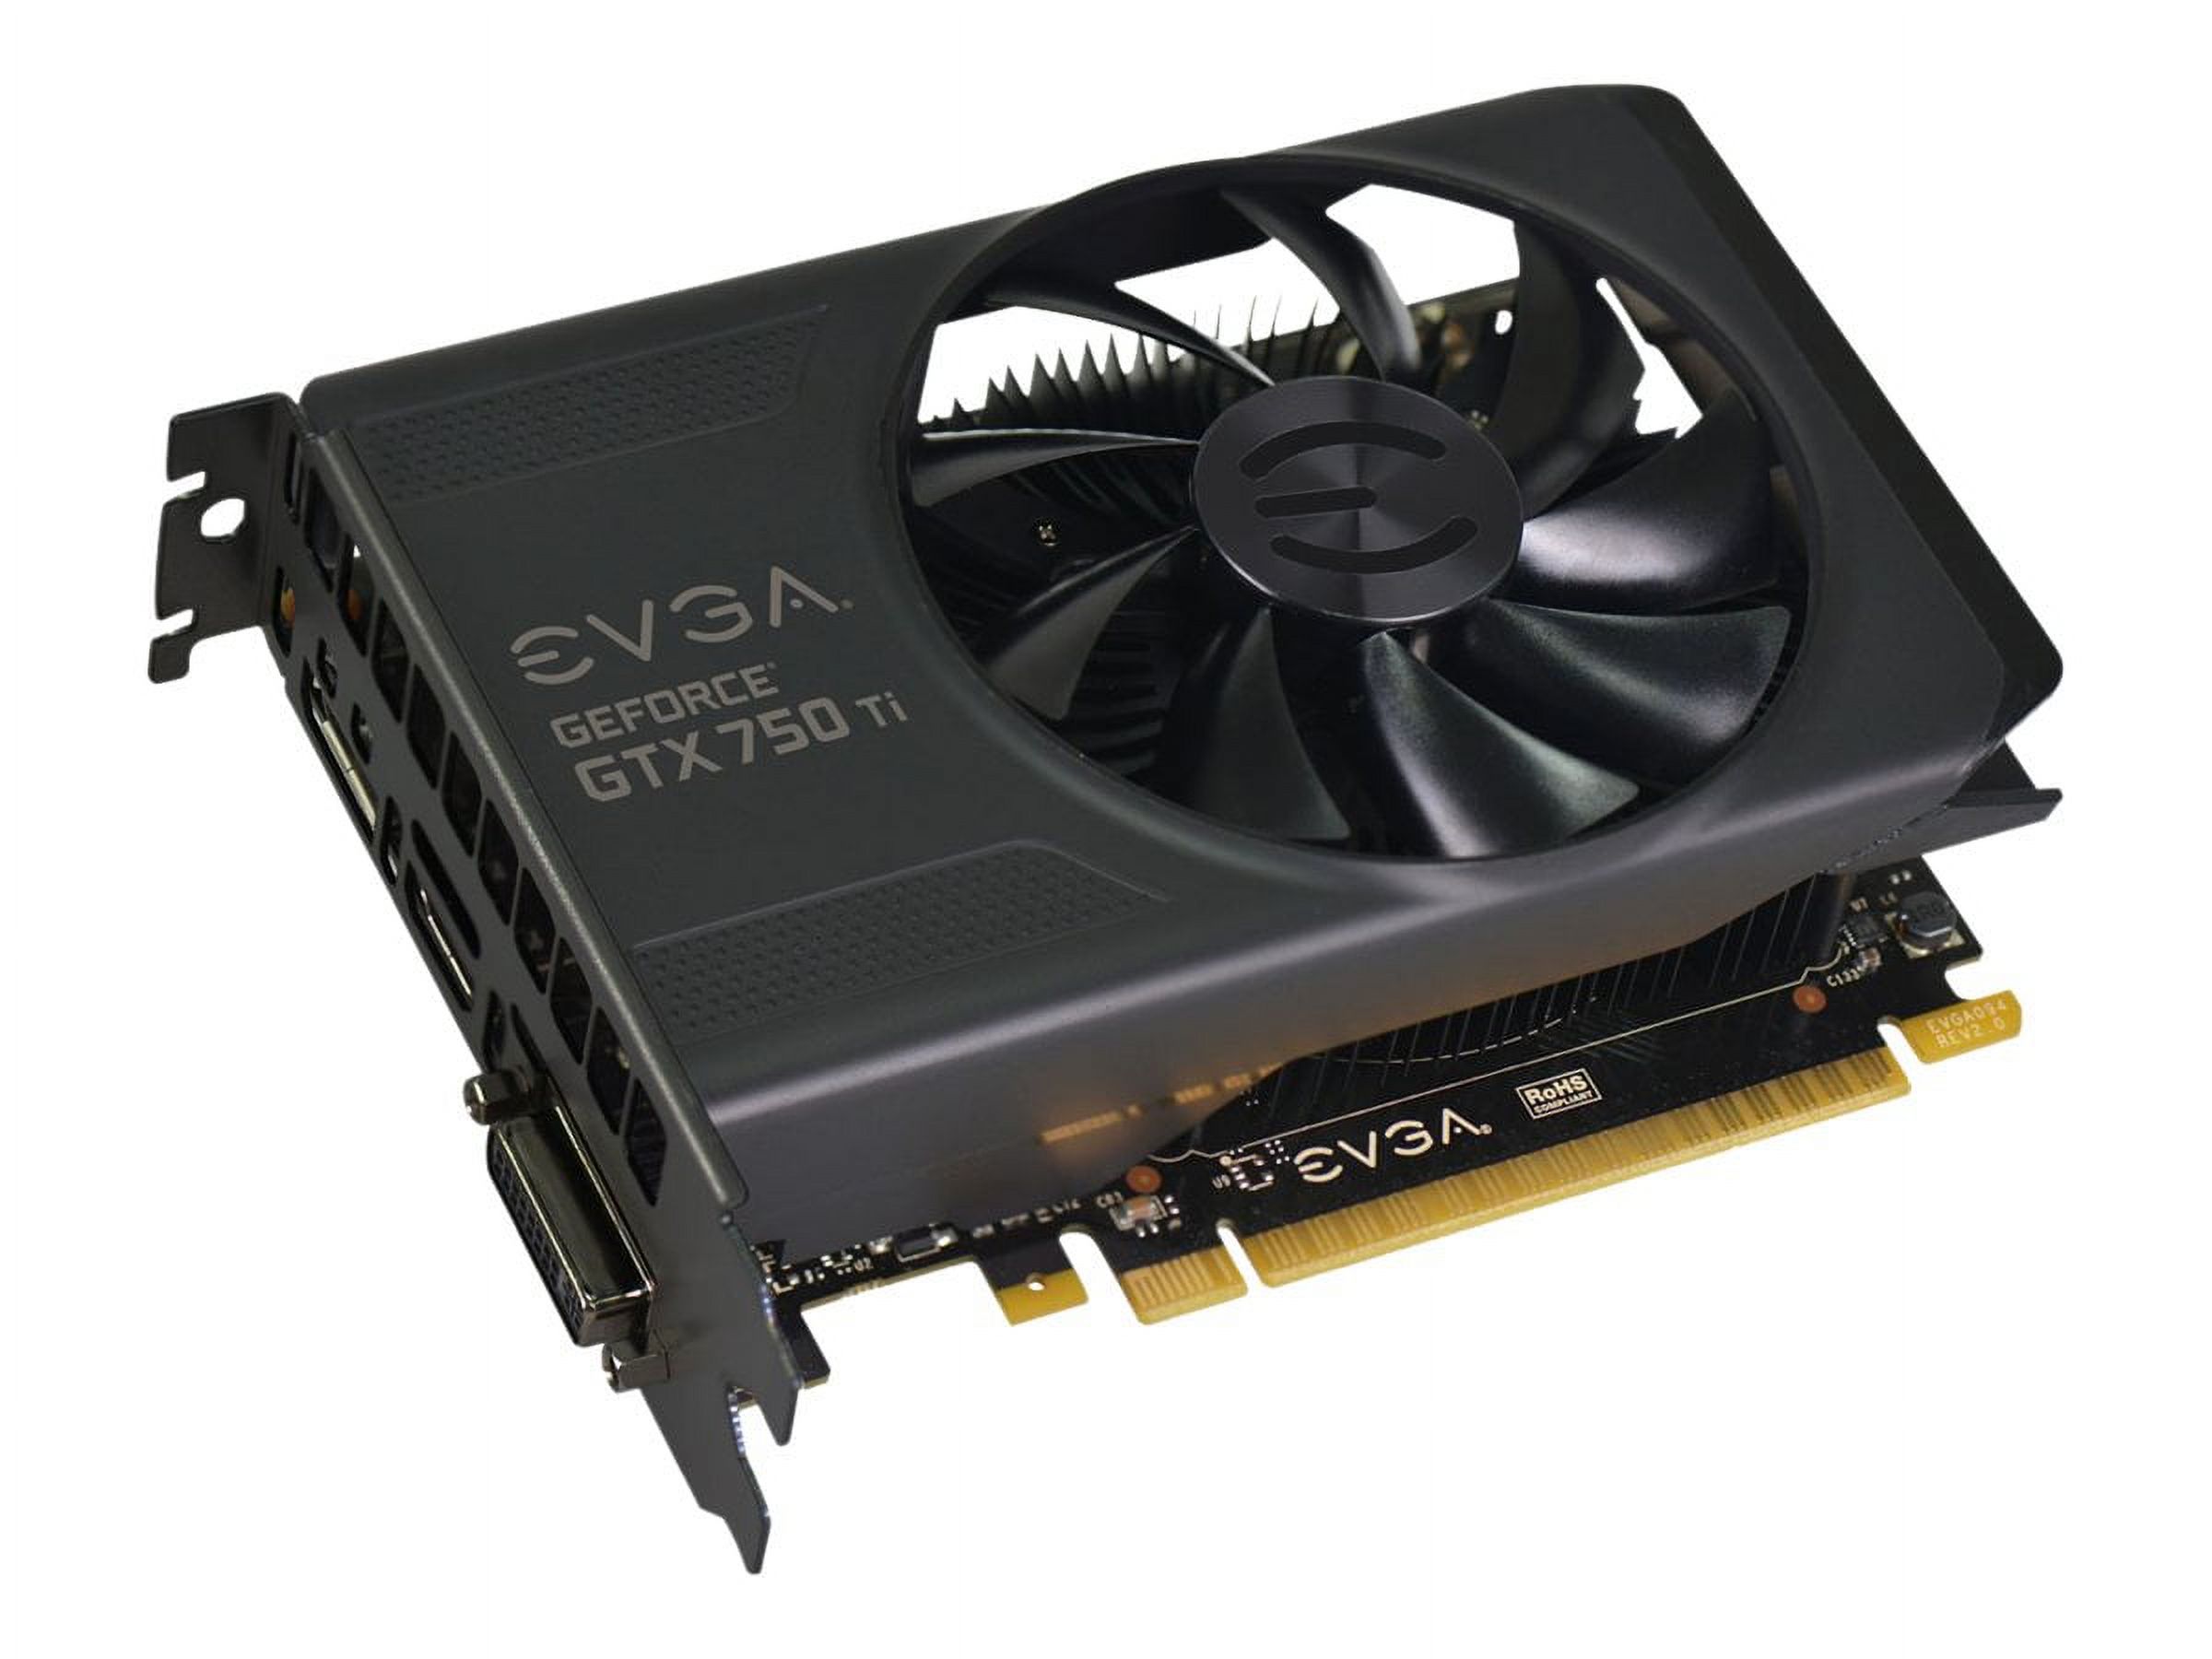 EVGA GeForce GTX 750 Ti - Graphics card - GF GTX 750 Ti - 2 GB GDDR5 - PCIe 3.0 x16 - DVI, HDMI, DisplayPort - image 1 of 7